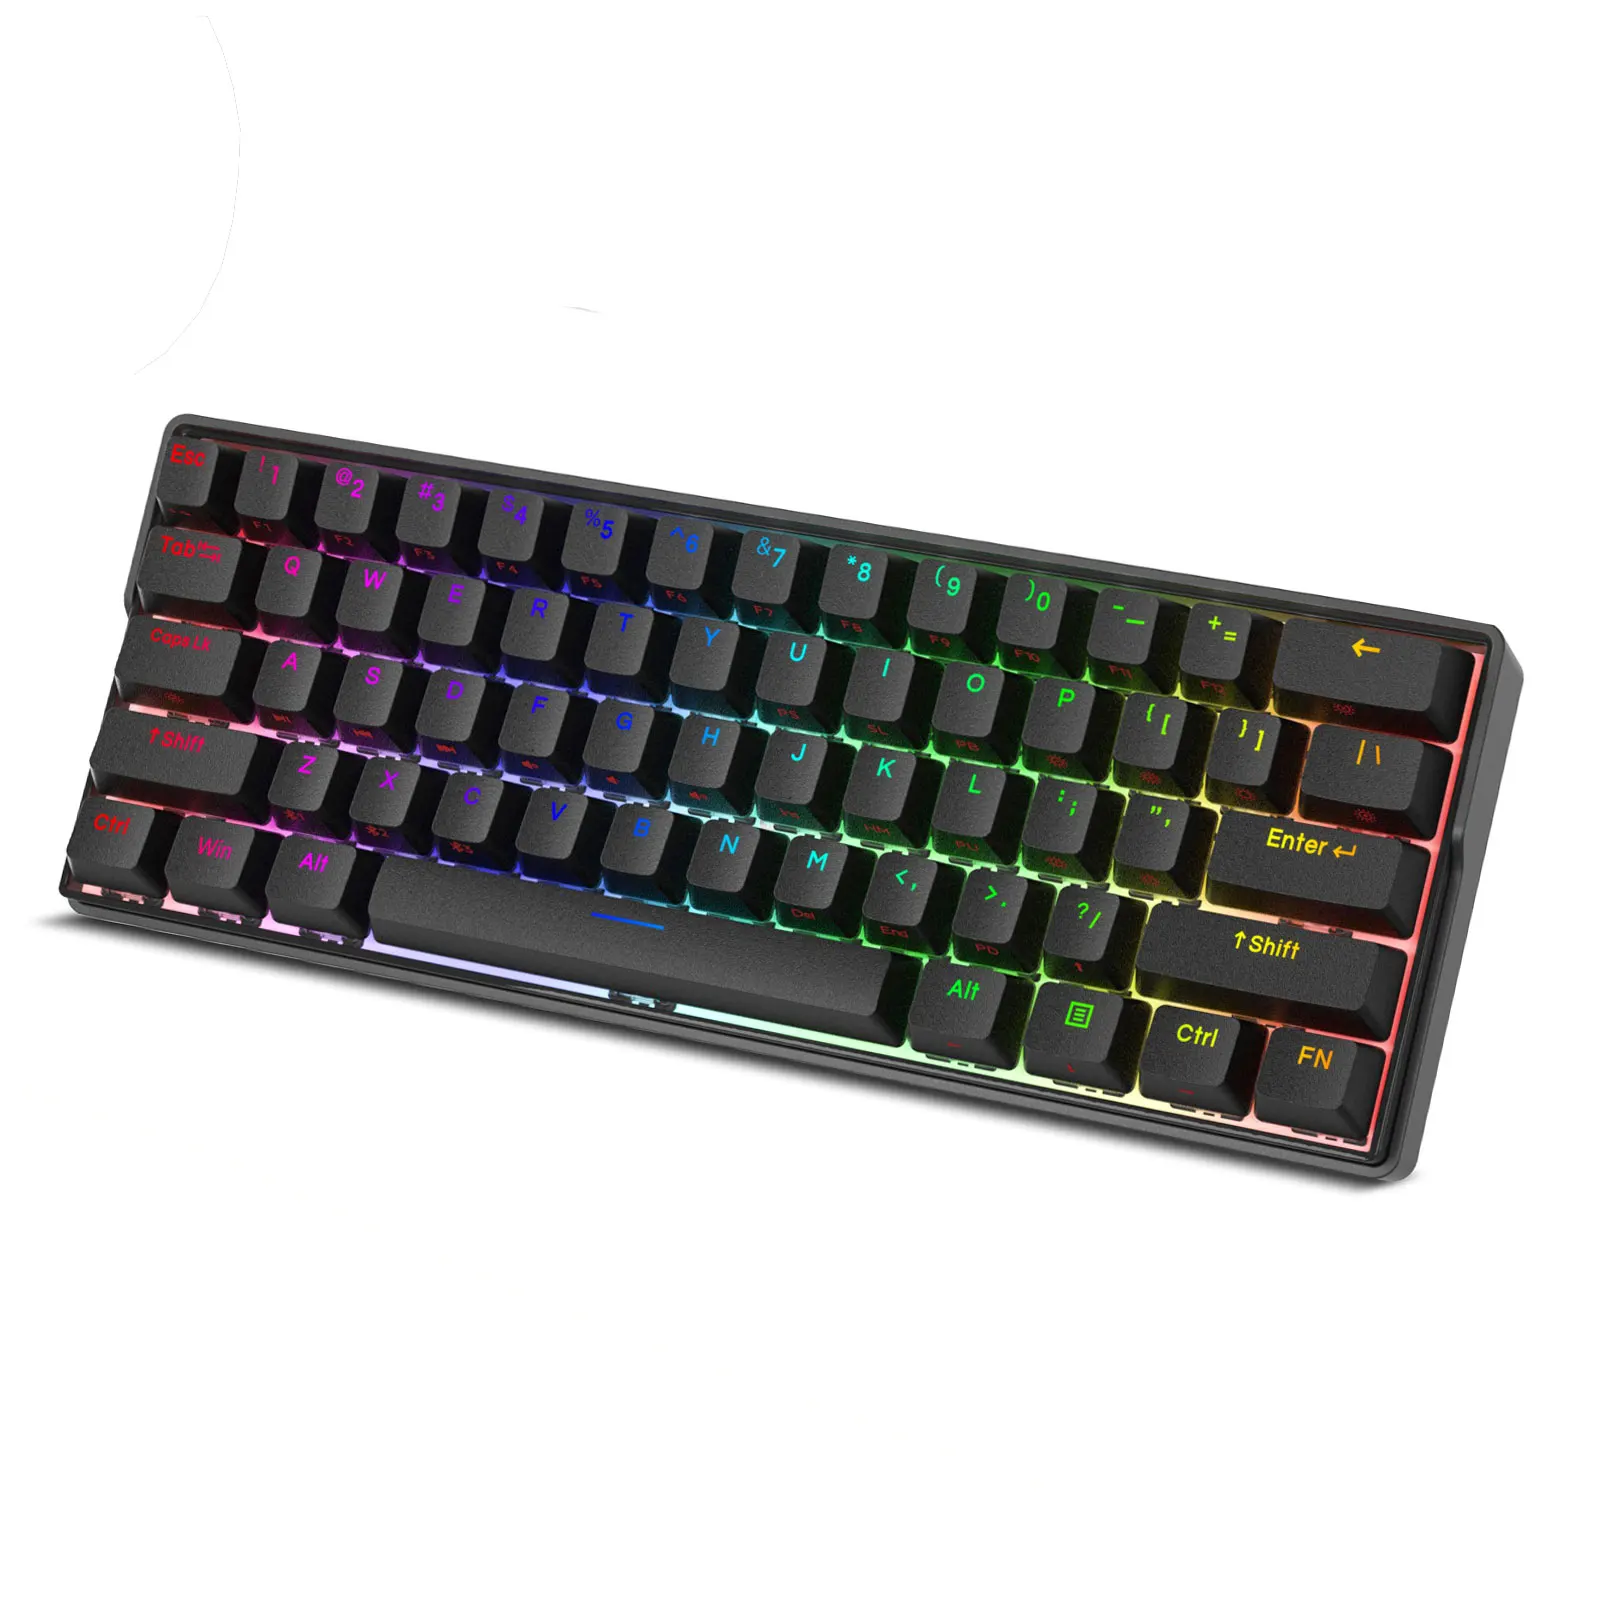 

Kemove 61 Keys Hot-swappable Wireless Gaming 60% Keyboard Dual-mode RGB Backlight Switch Programmable Mechanical Keyboard DK61, White